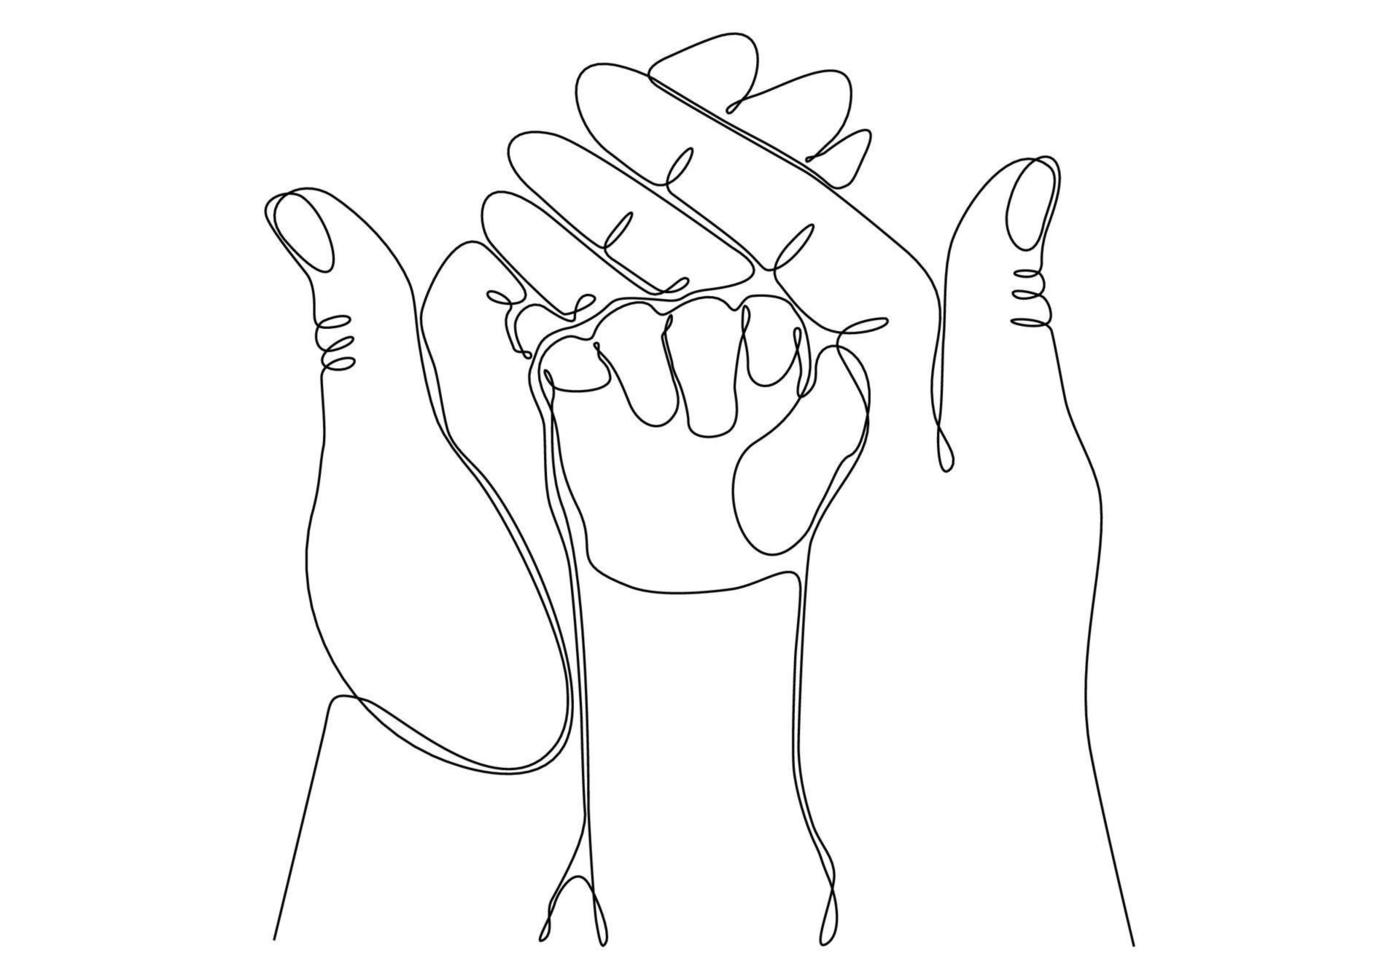 kontinuerlig line art baby håller lillfingret av vuxen hand tillsammans. en linje design style.- vektor illustration